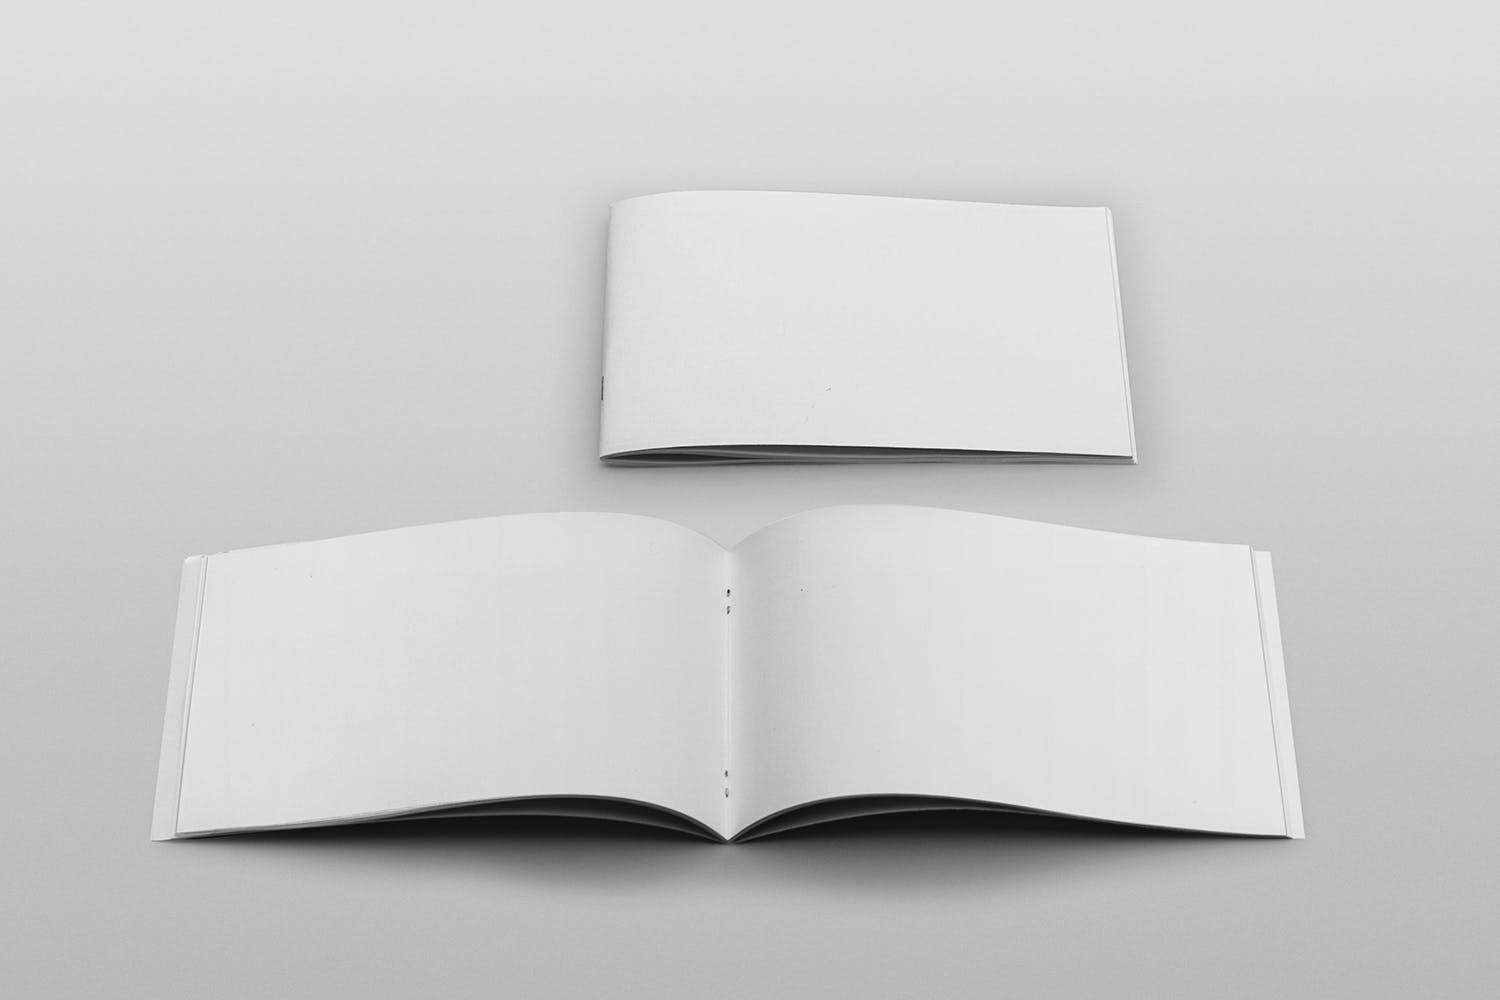 企业画册产品手册封面&内页版式设计正视图样机16图库精选 Cover & Open Landscape Brochure Mockup Front View插图(1)